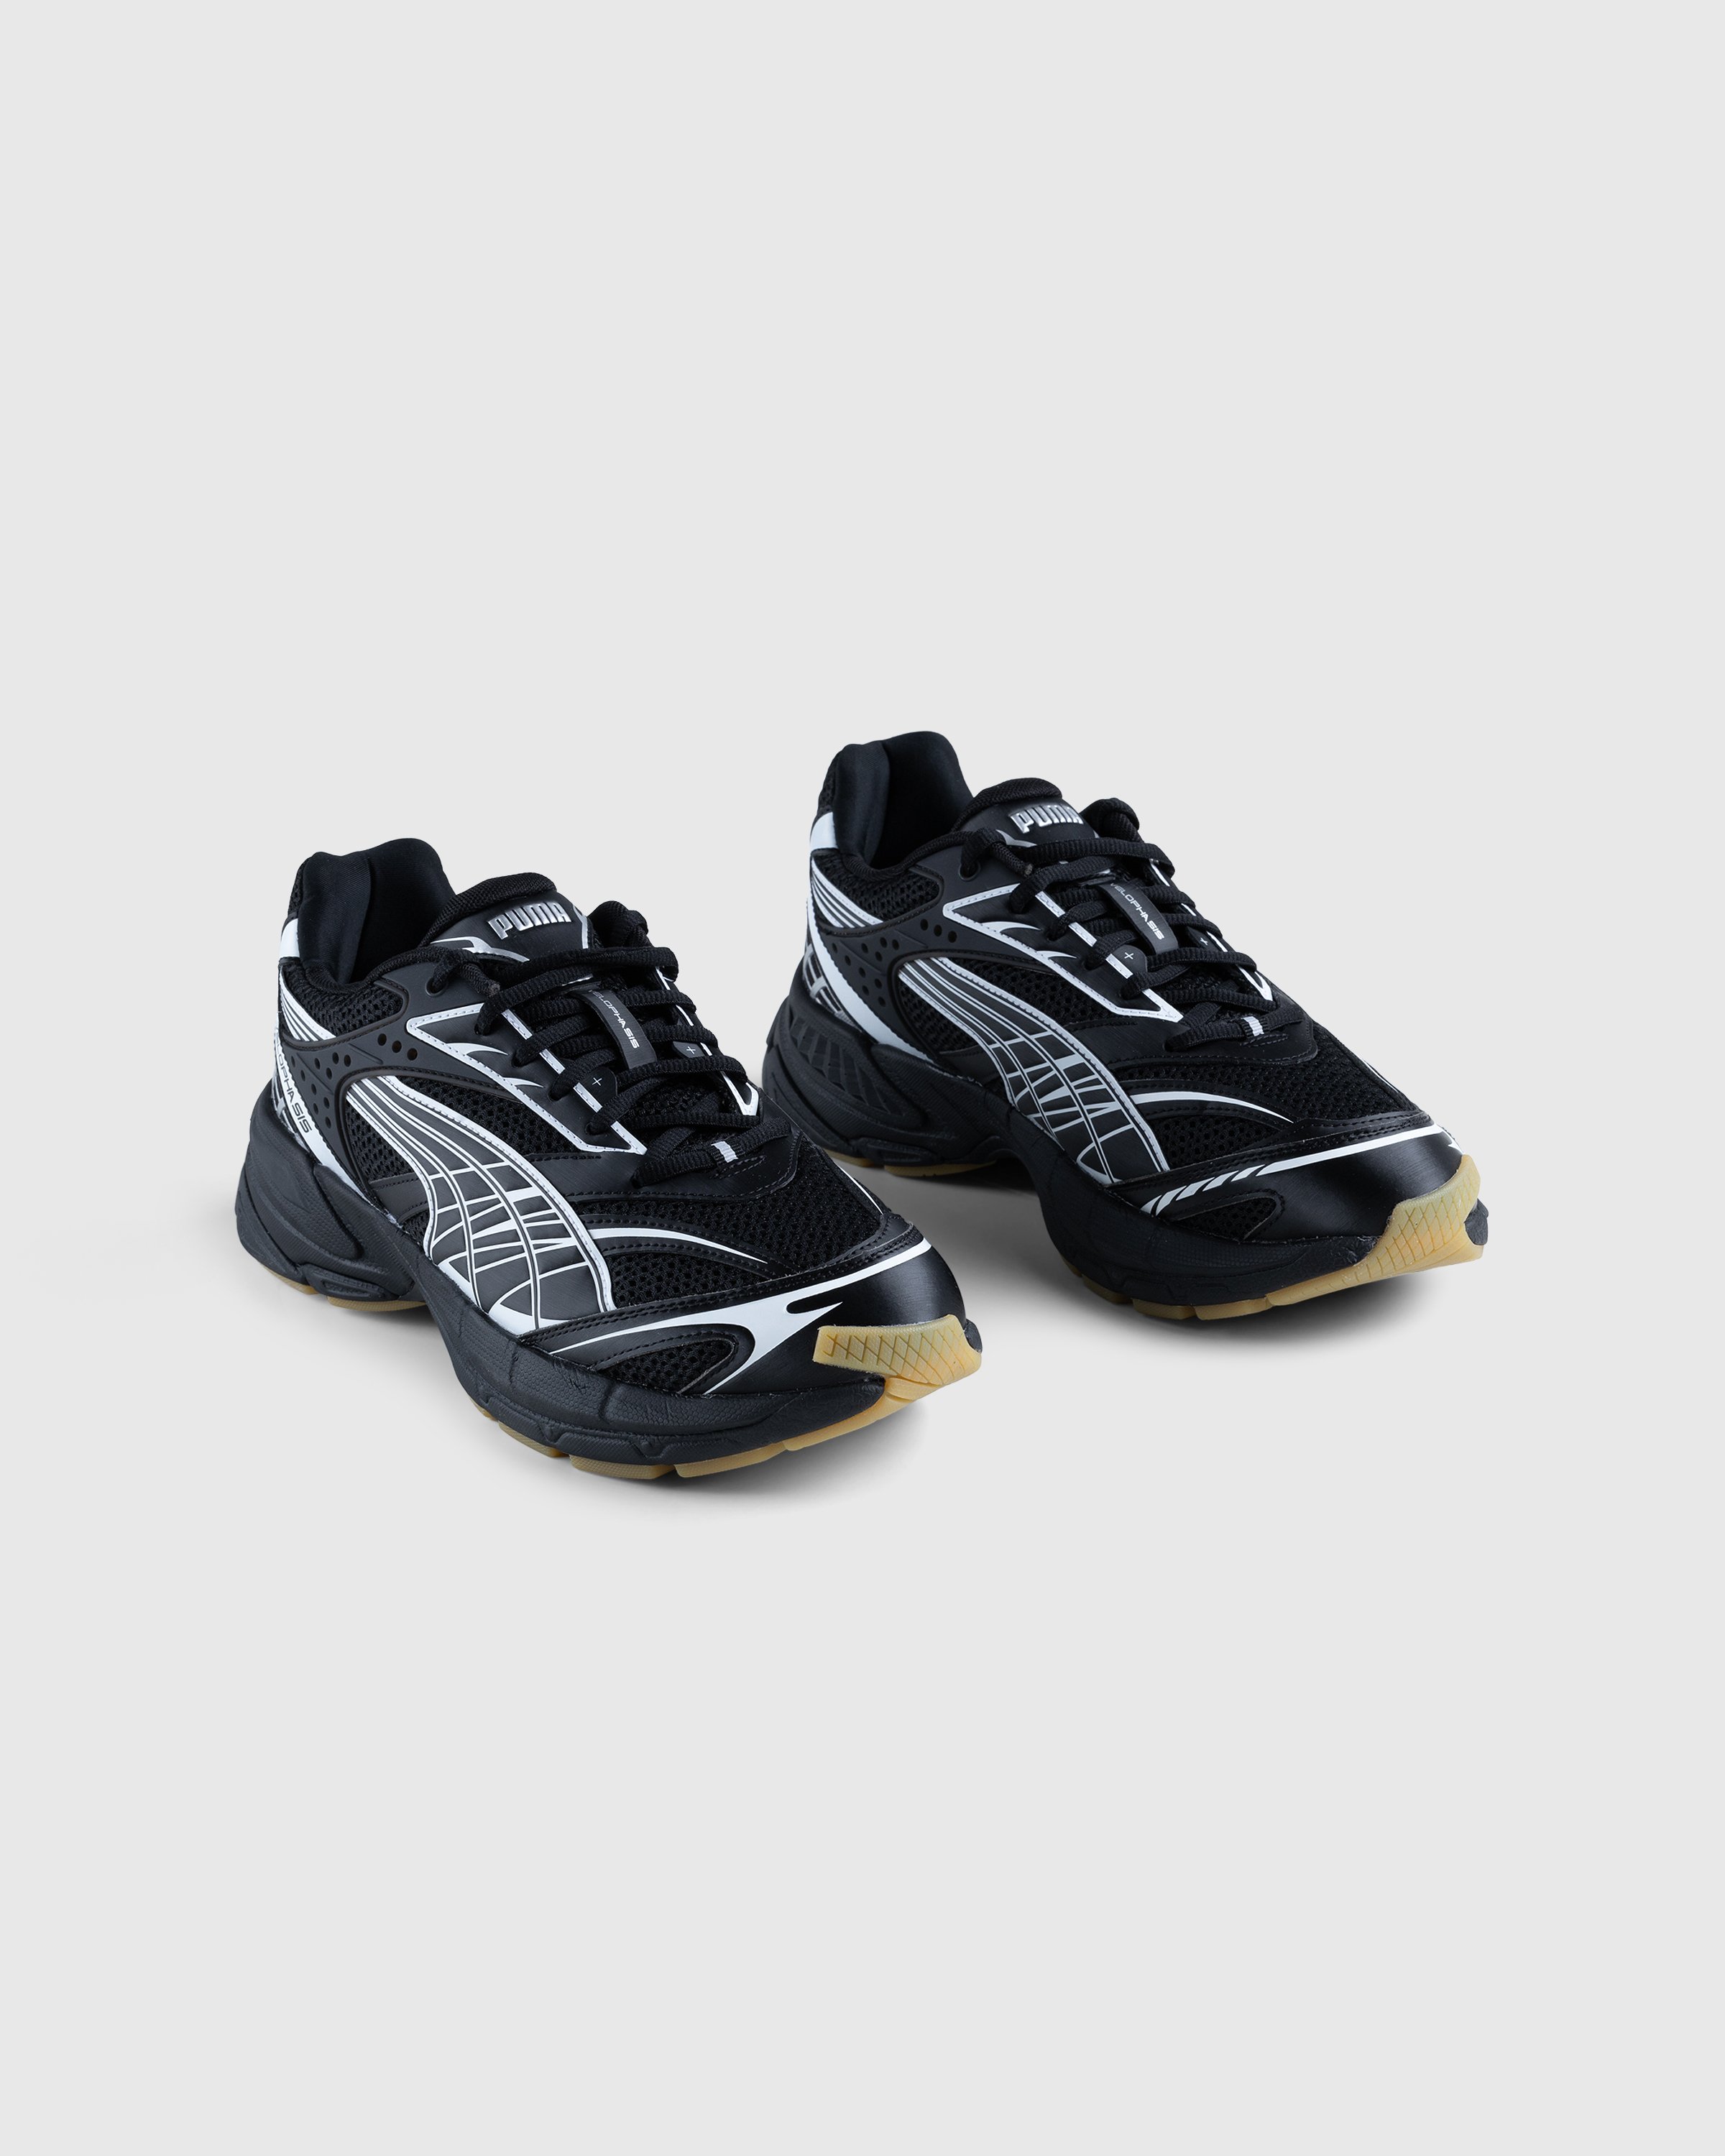 Puma - Velophasis Technisch Black - Footwear - Black - Image 3